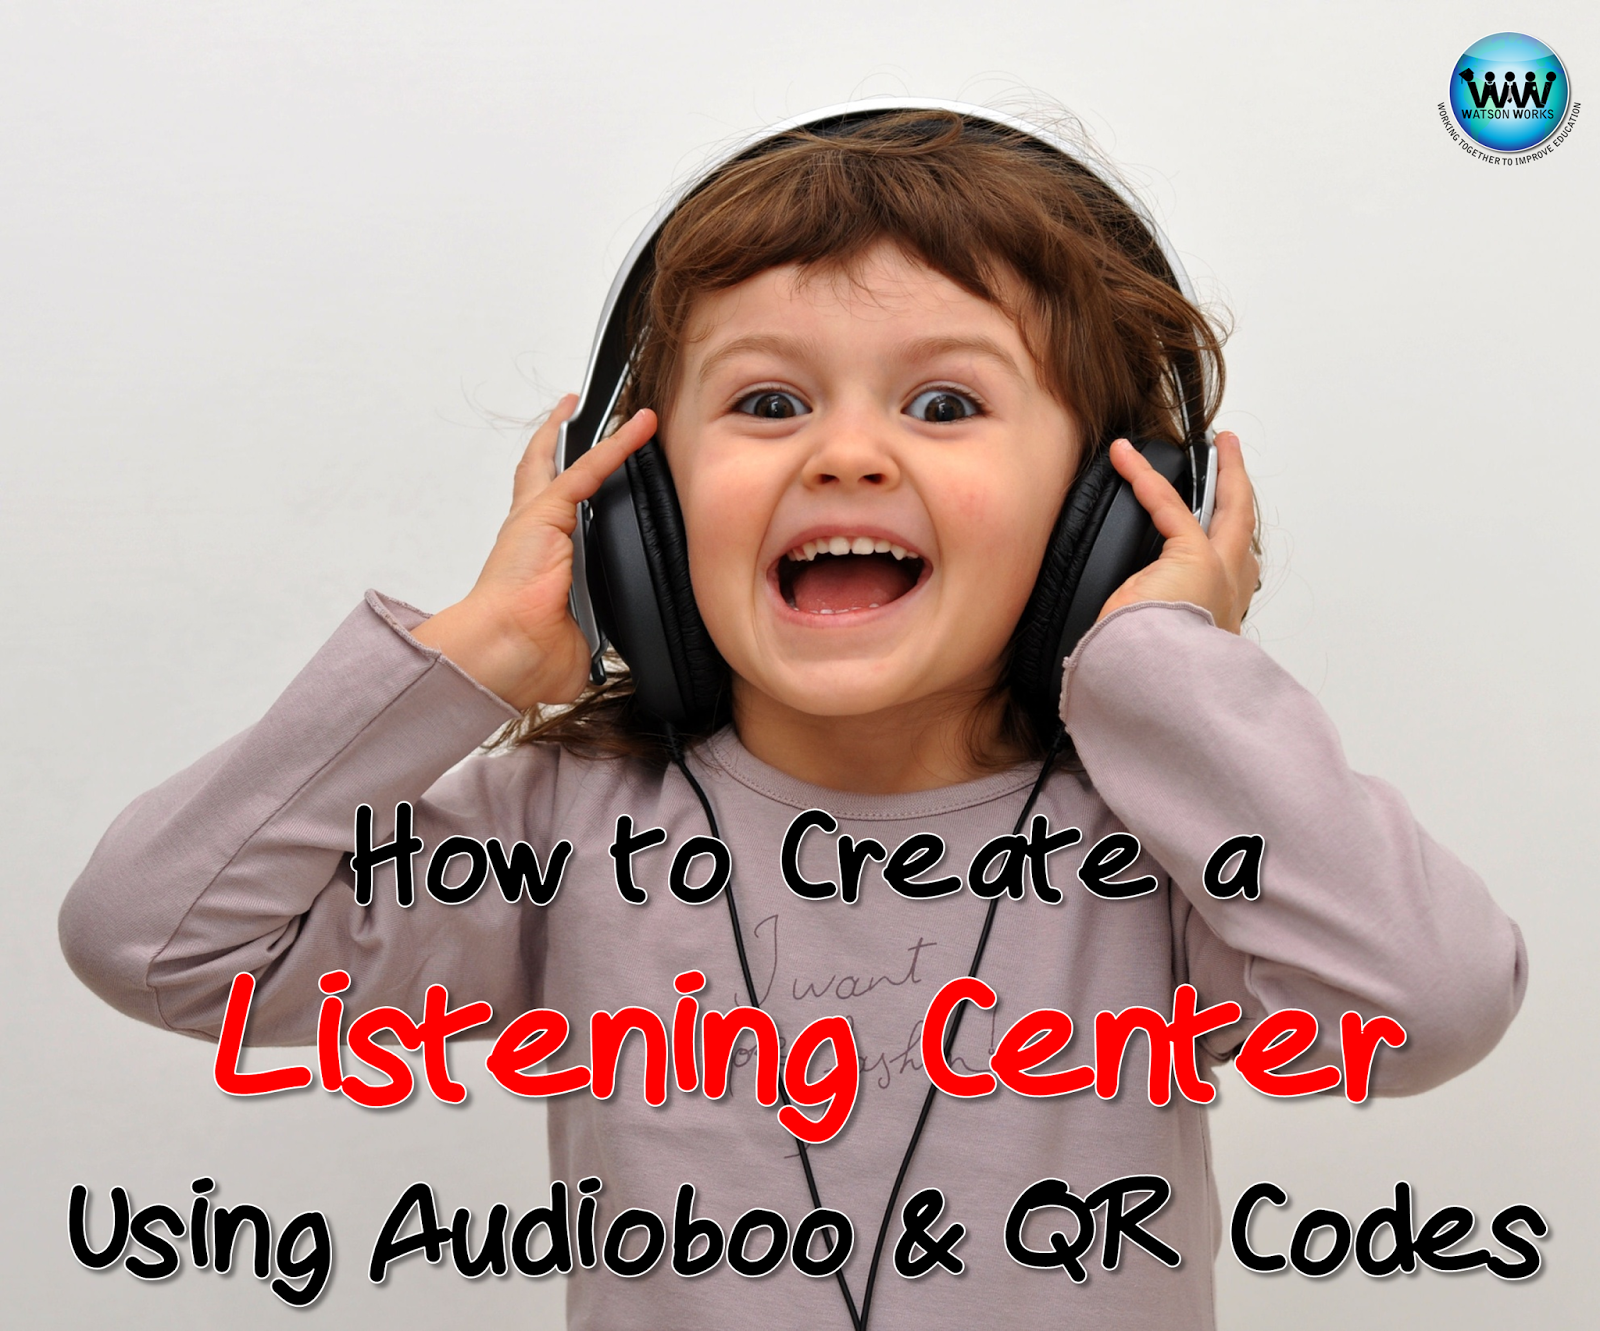 http://www.teacherspayteachers.com/Product/How-to-Create-a-Listening-Center-Using-the-Audioboo-App-QR-Codes-1448099